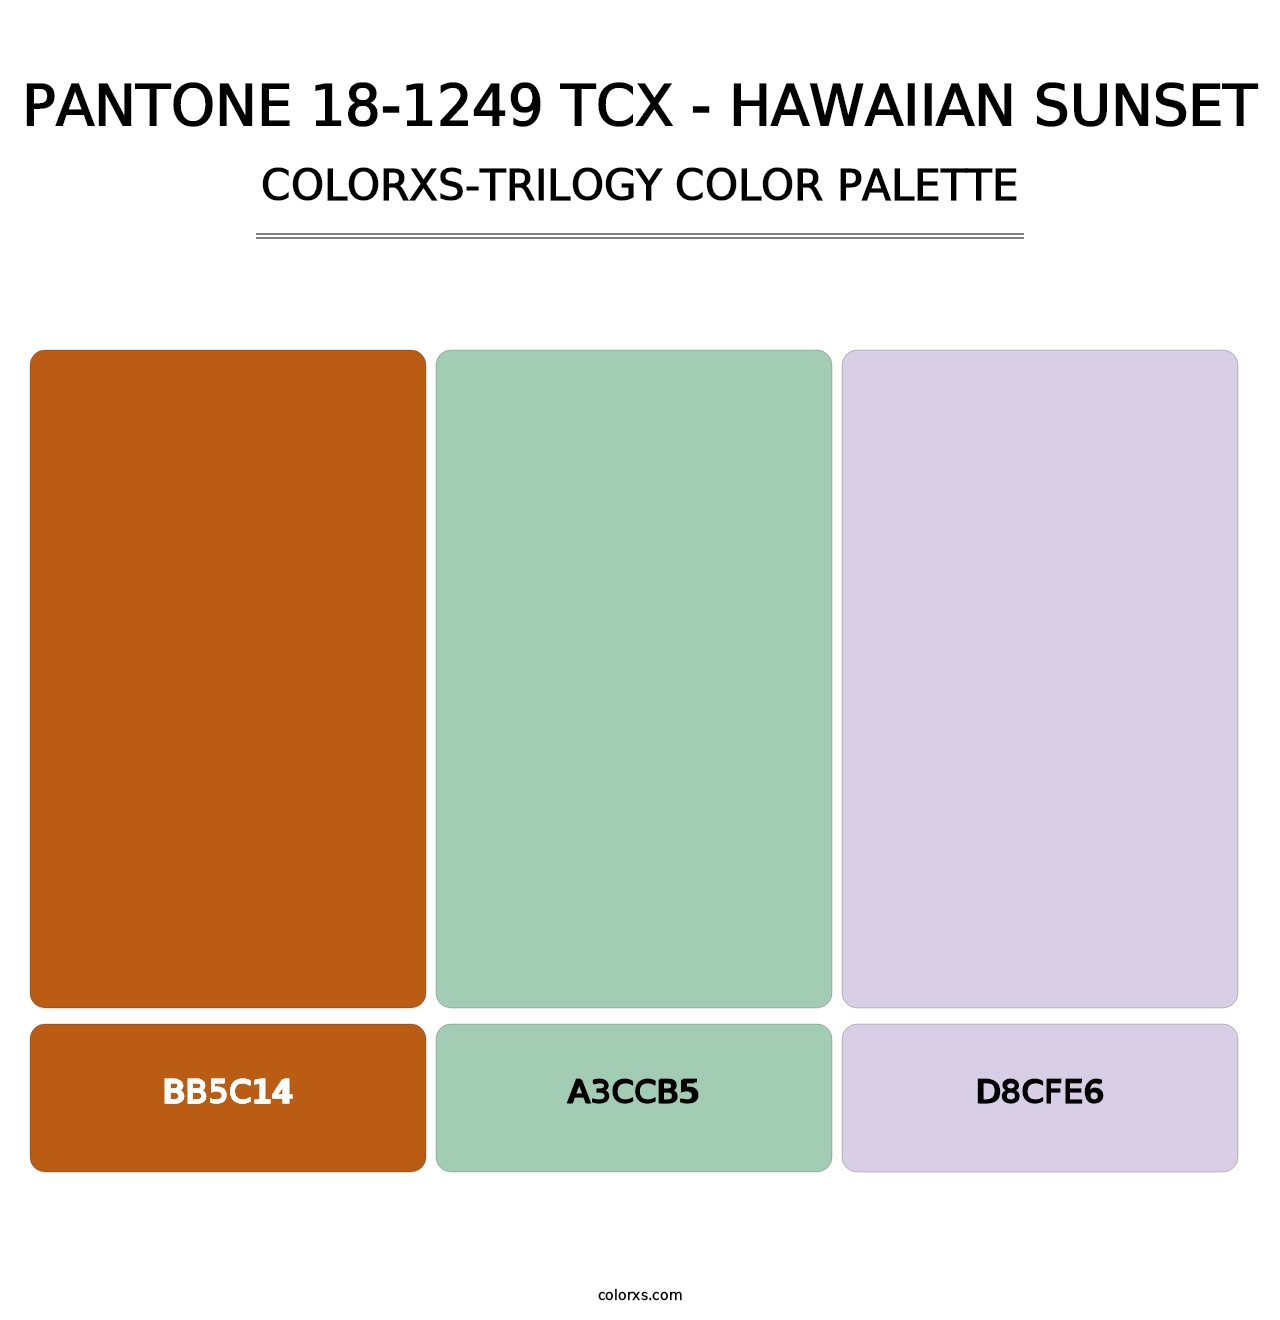 PANTONE 18-1249 TCX - Hawaiian Sunset - Colorxs Trilogy Palette